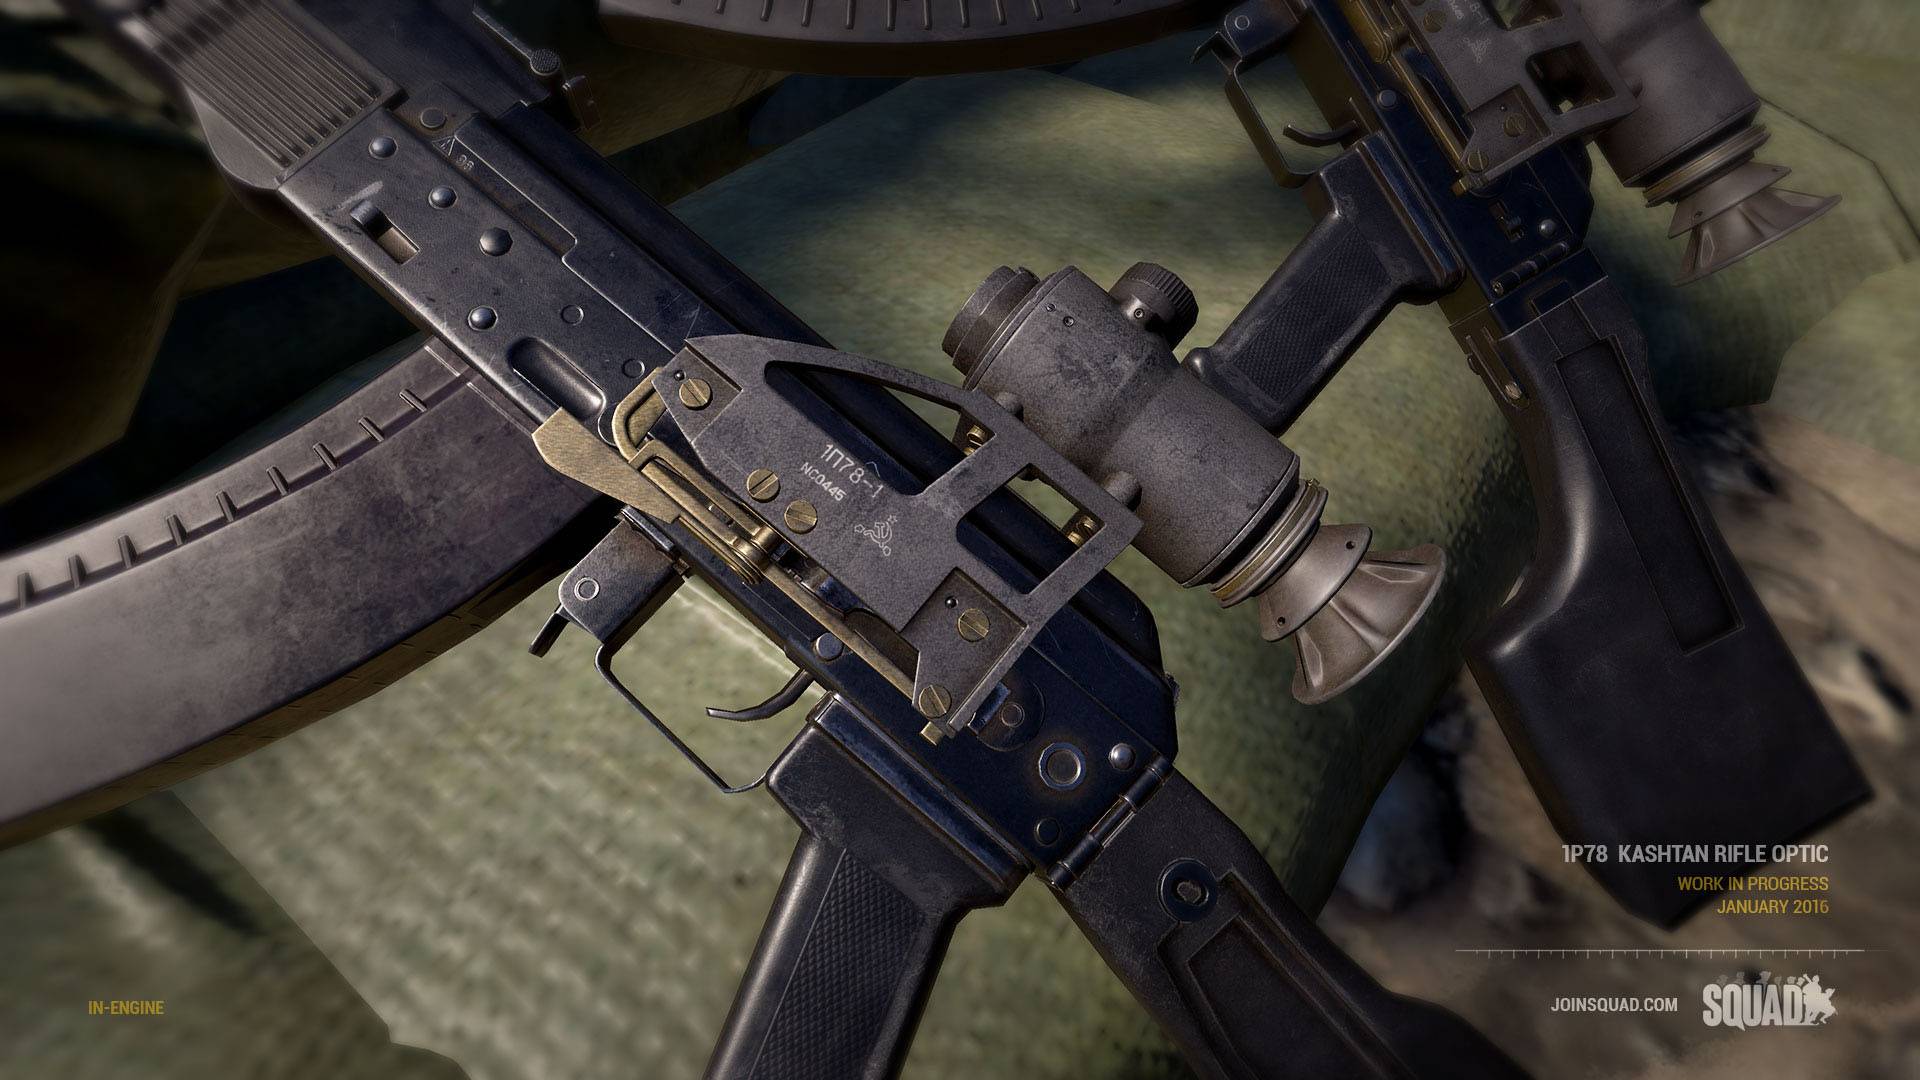 SQUAD rifle optic